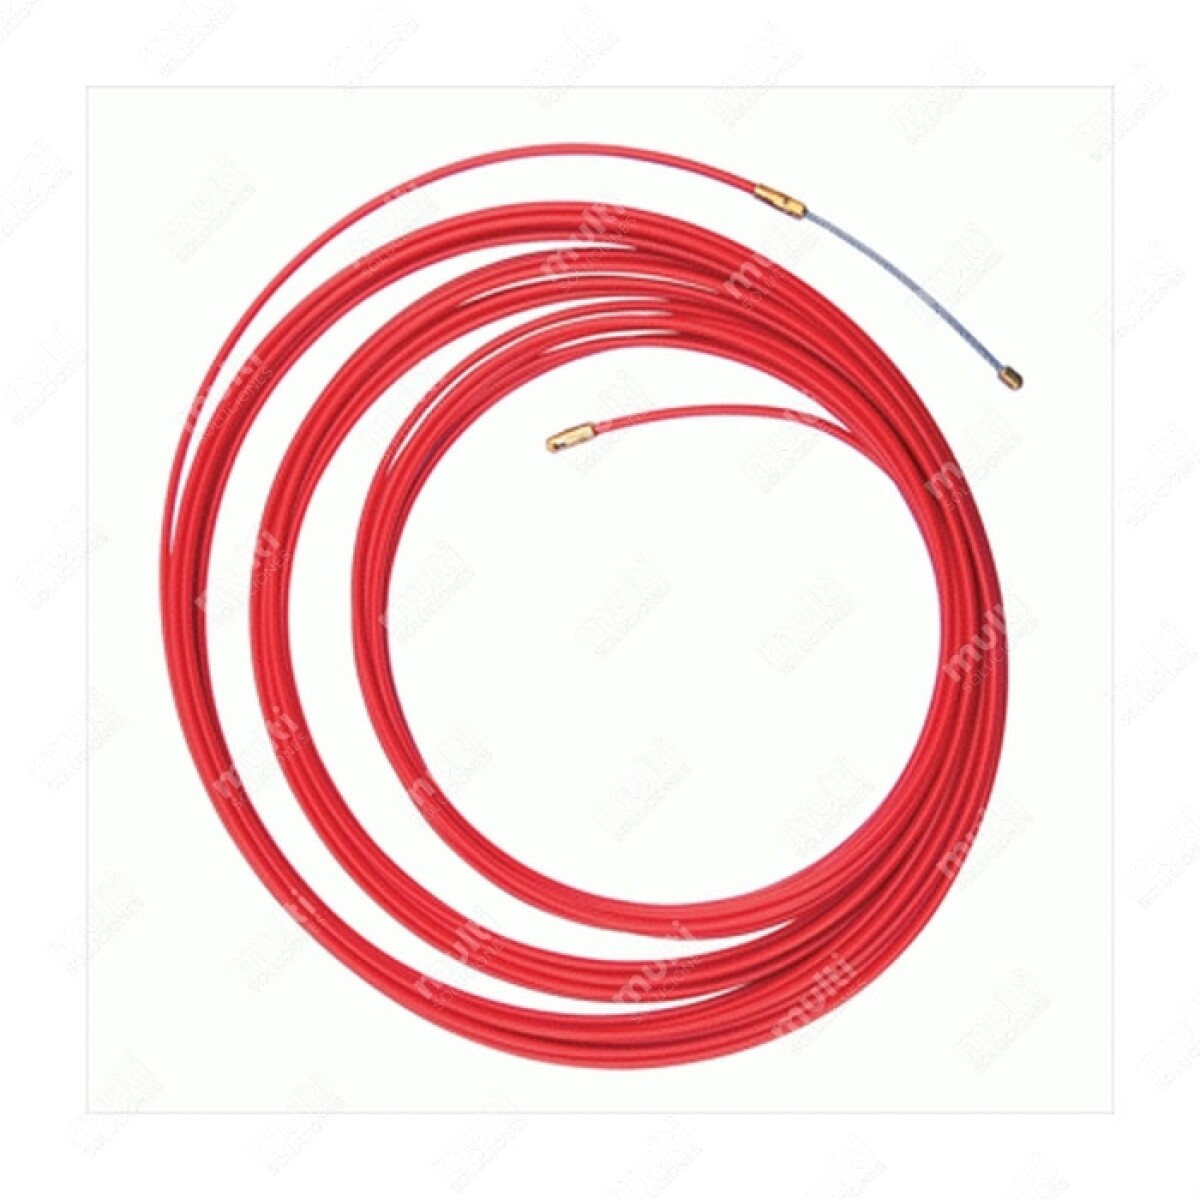 Cinta p/enhebrar cable plast. 4mm x 25mt 